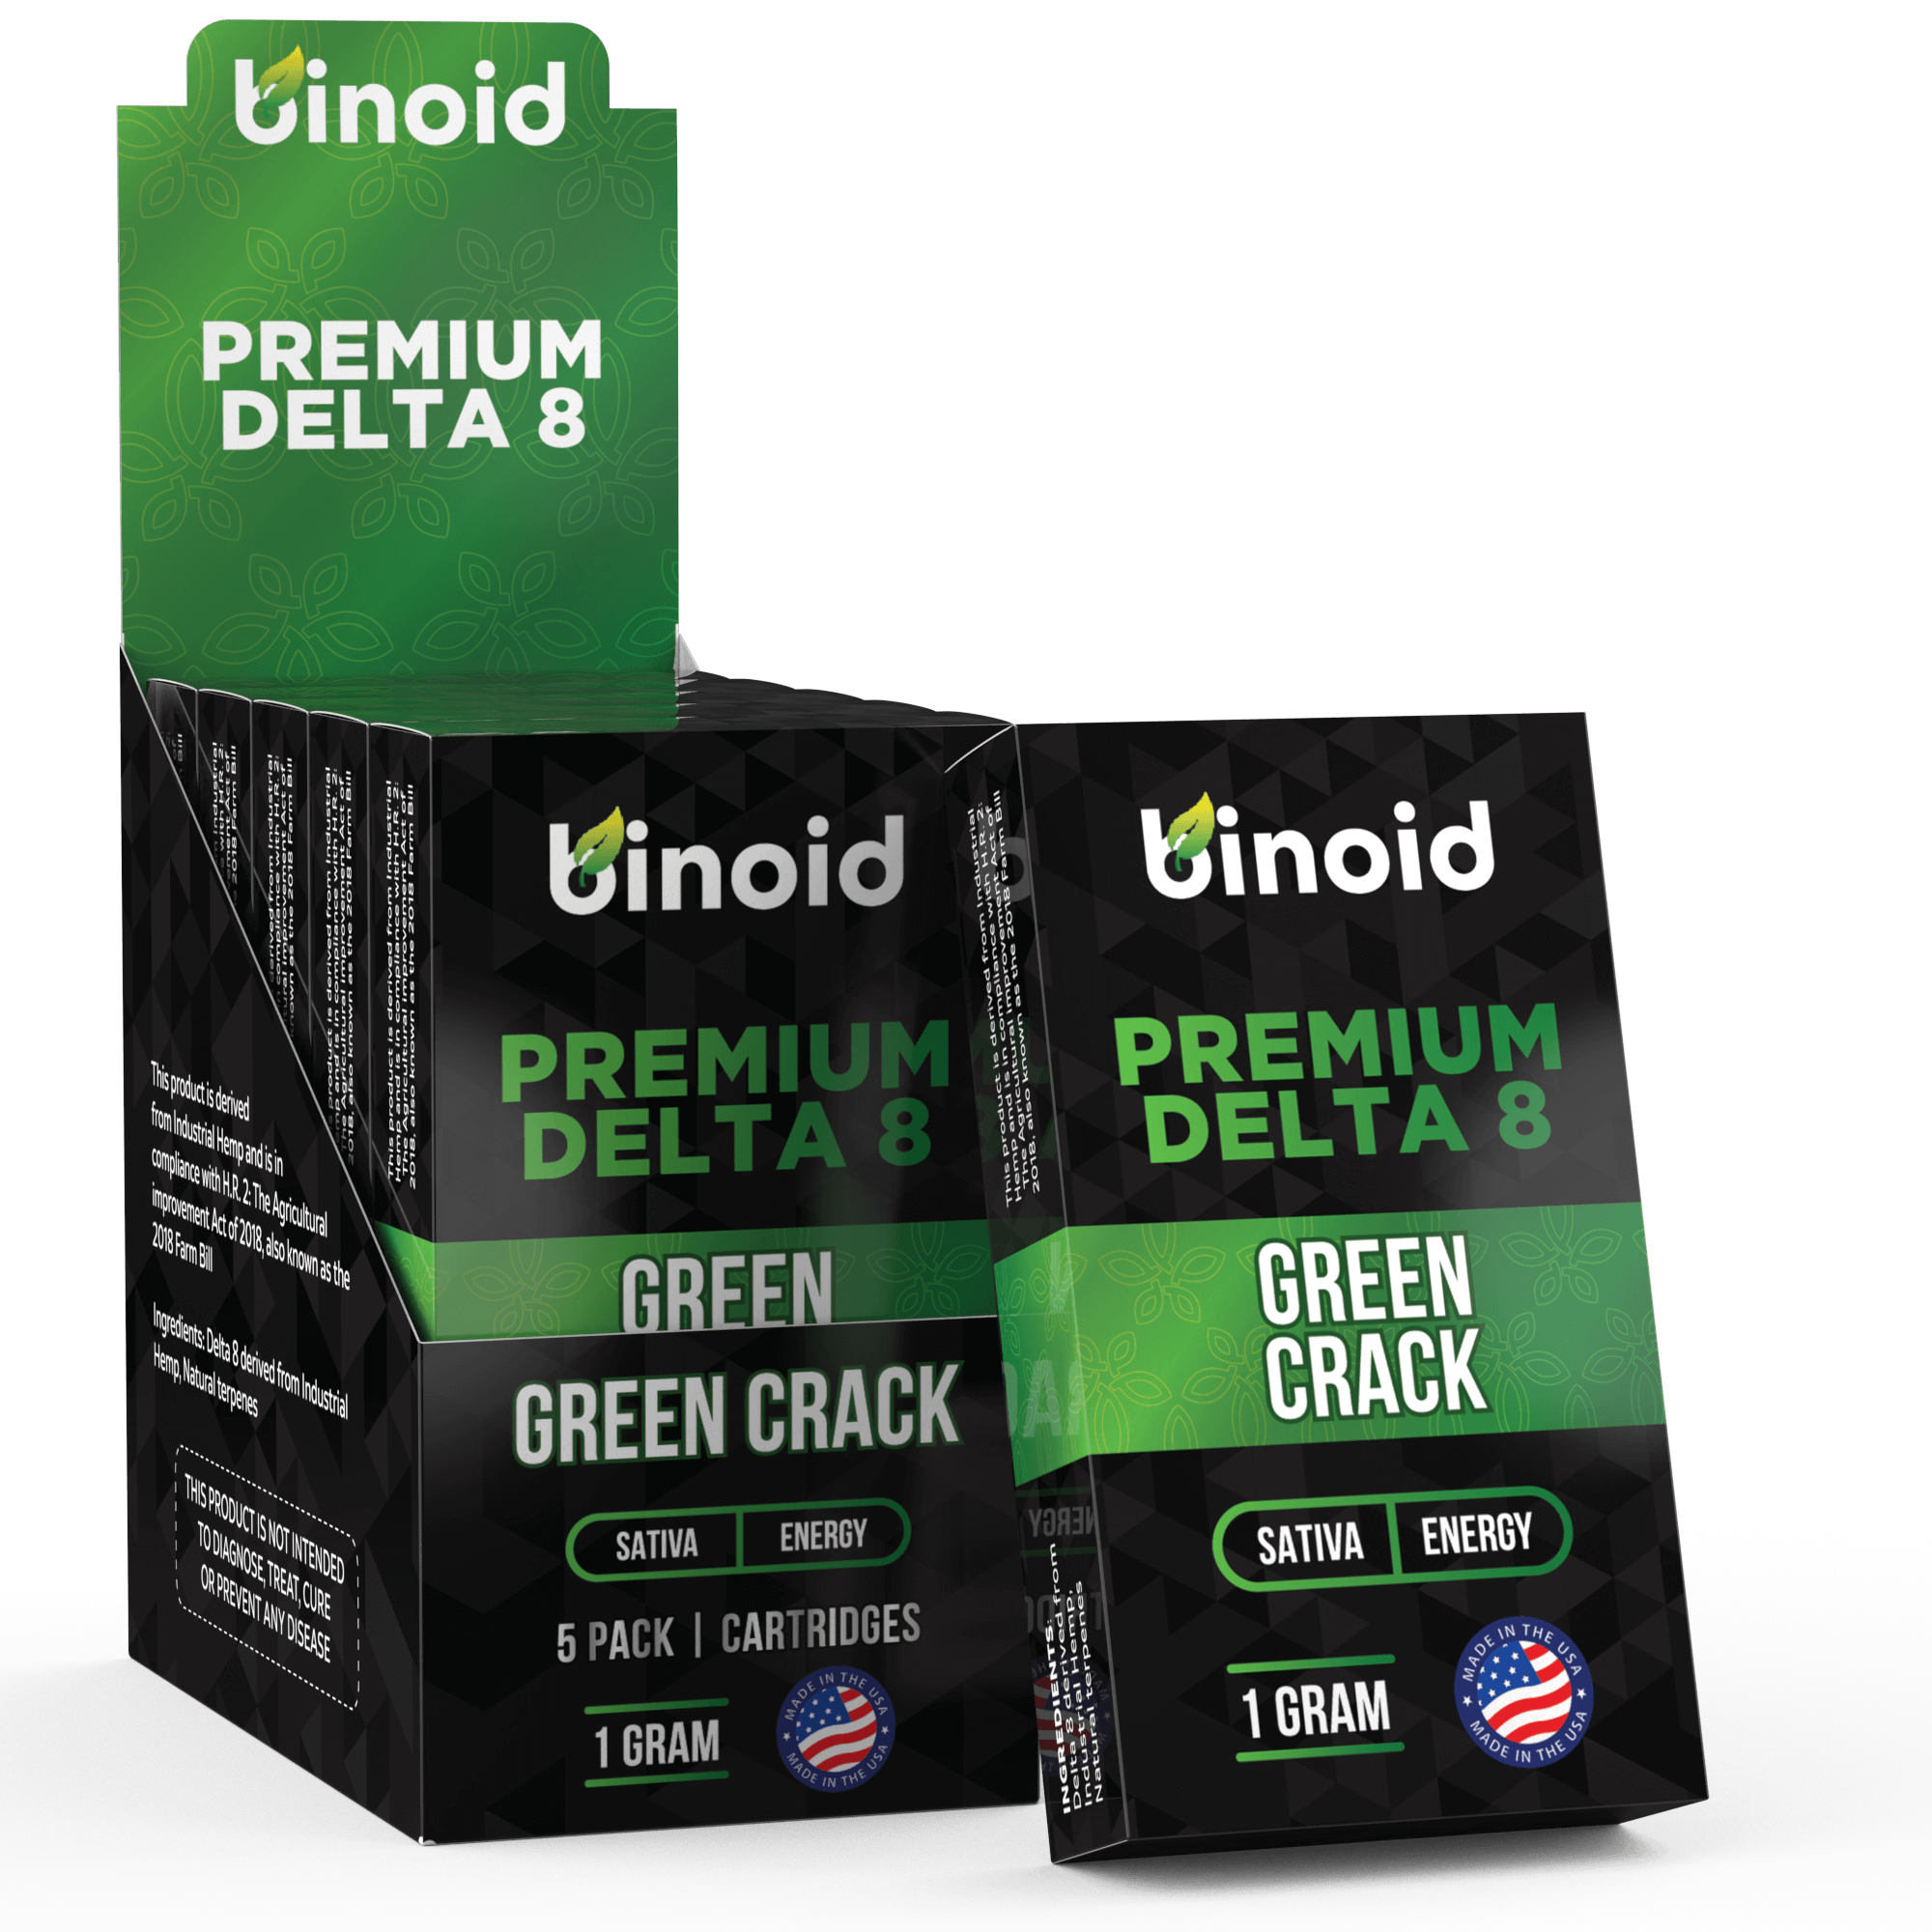 Binoid Delta 8 THC Vape Cartridge - Green Crack Best Price